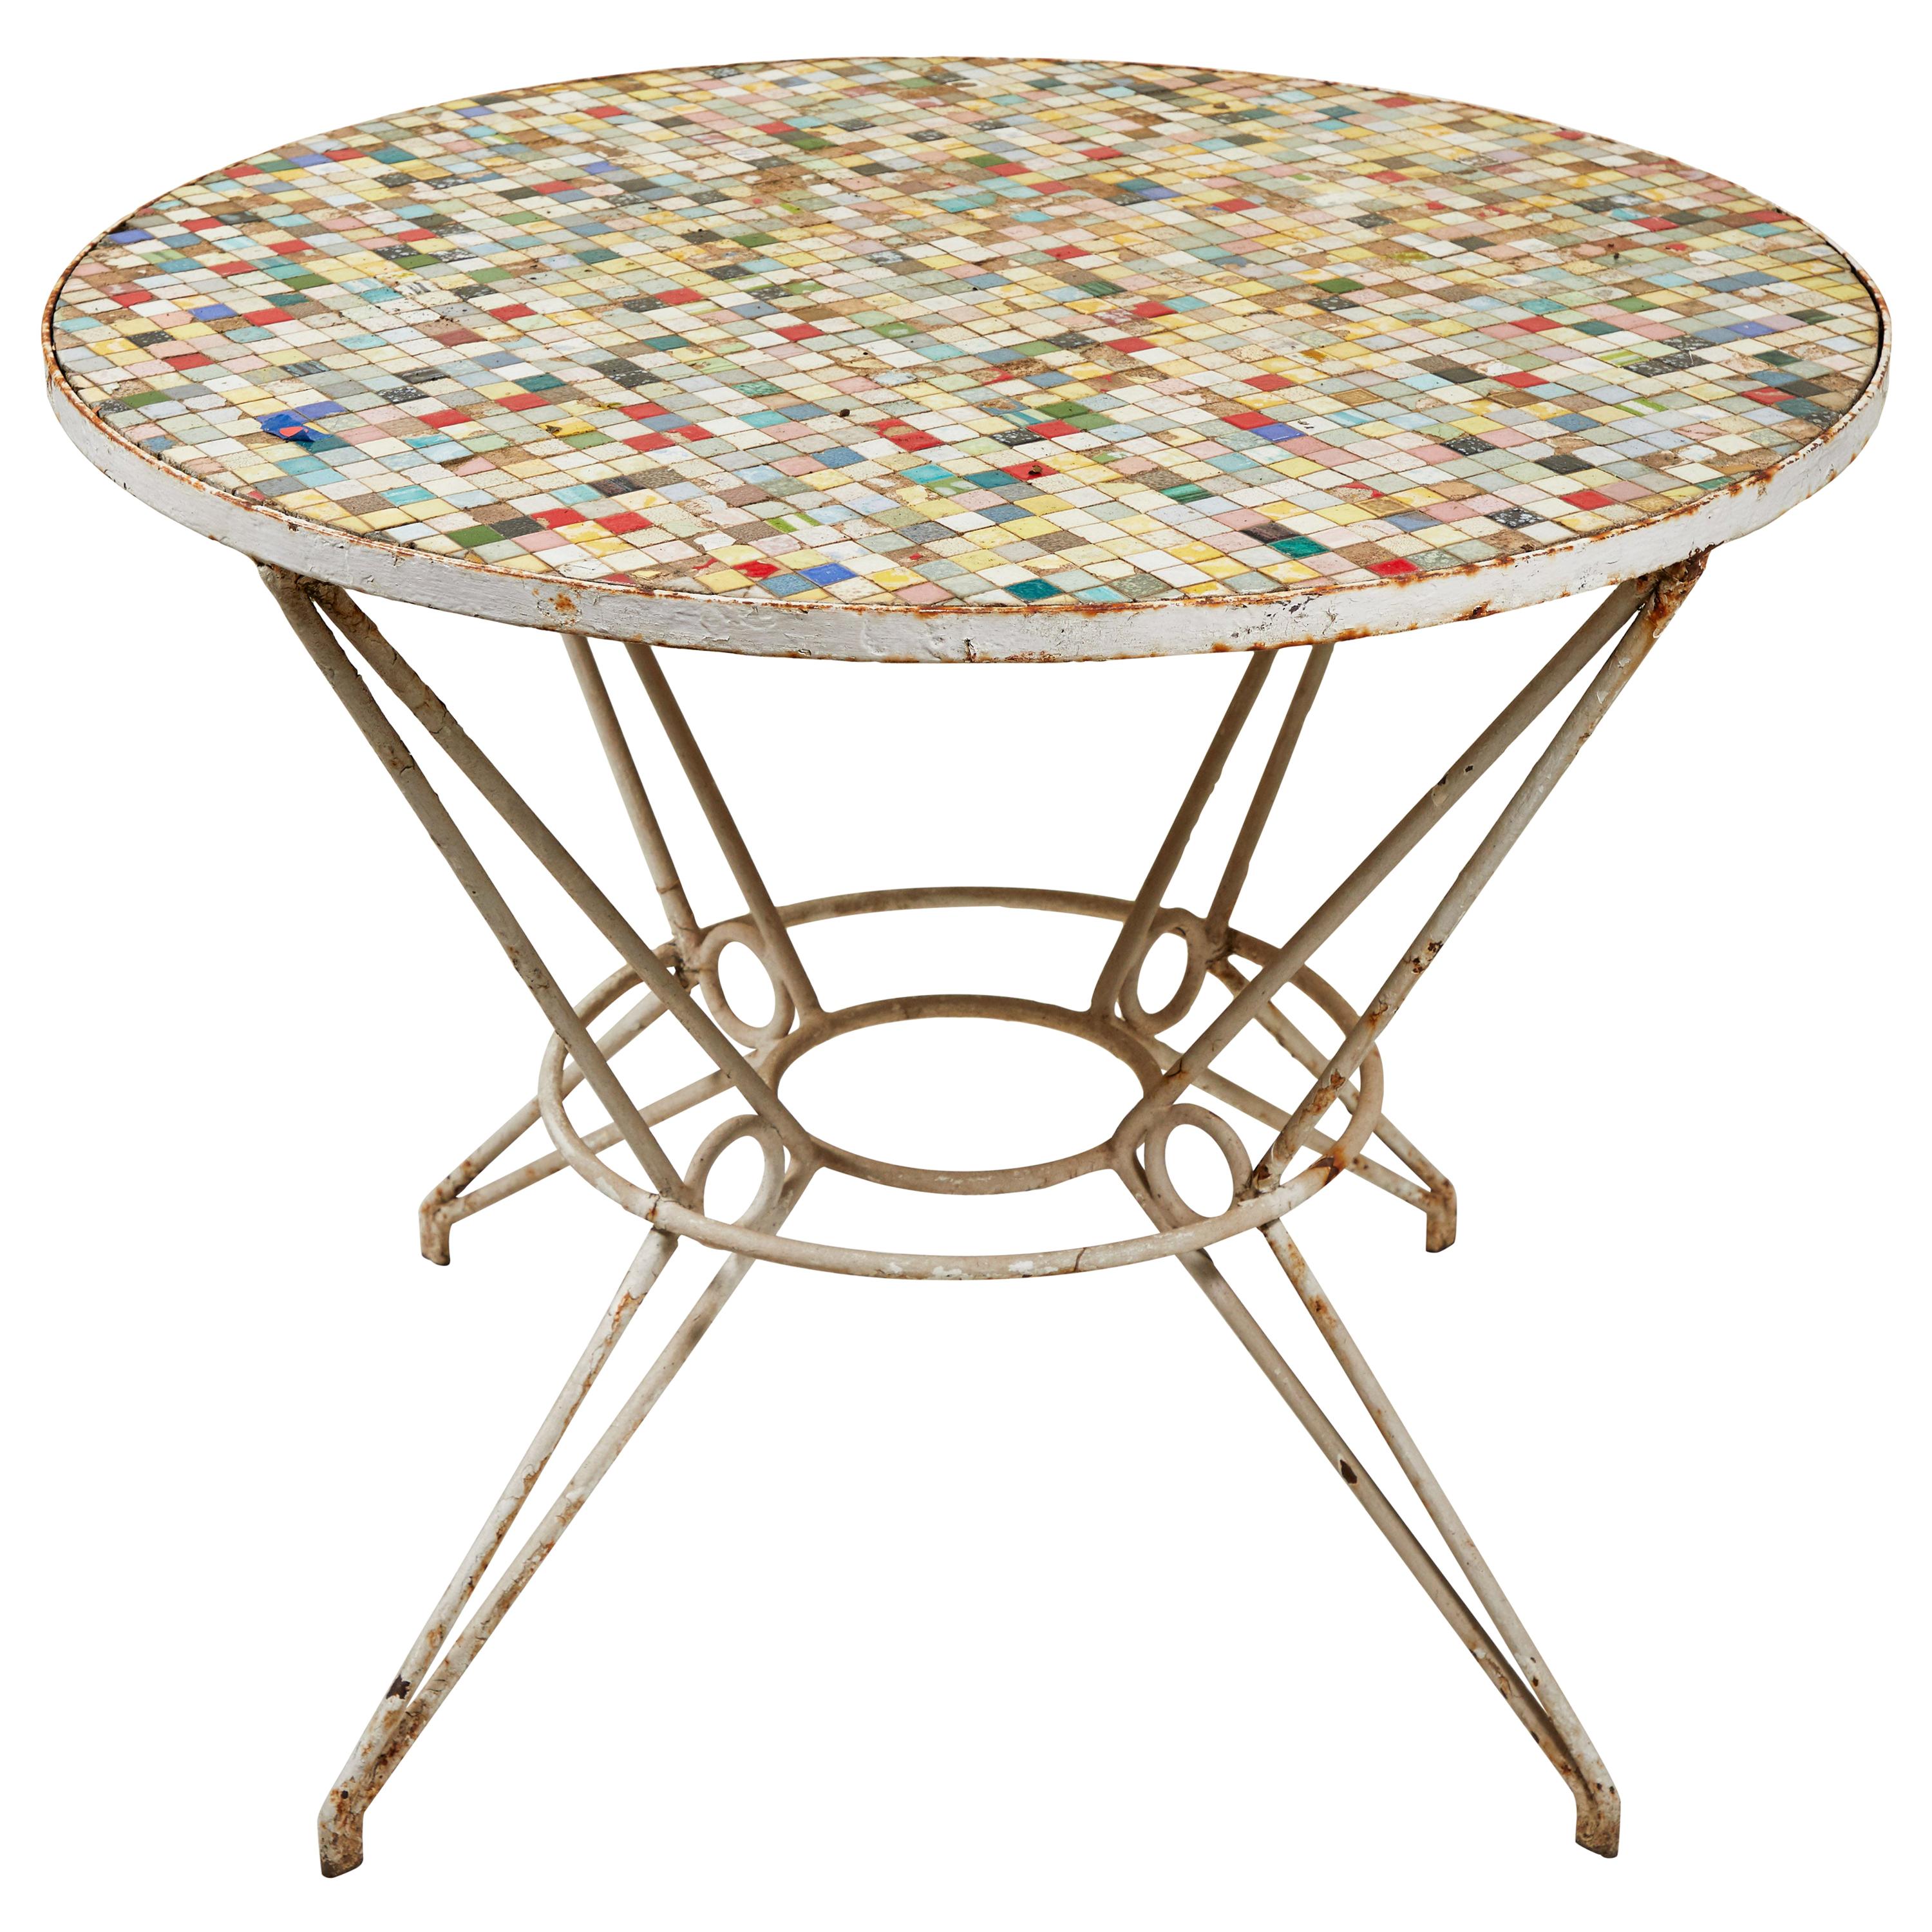 Multicolored Tile Table